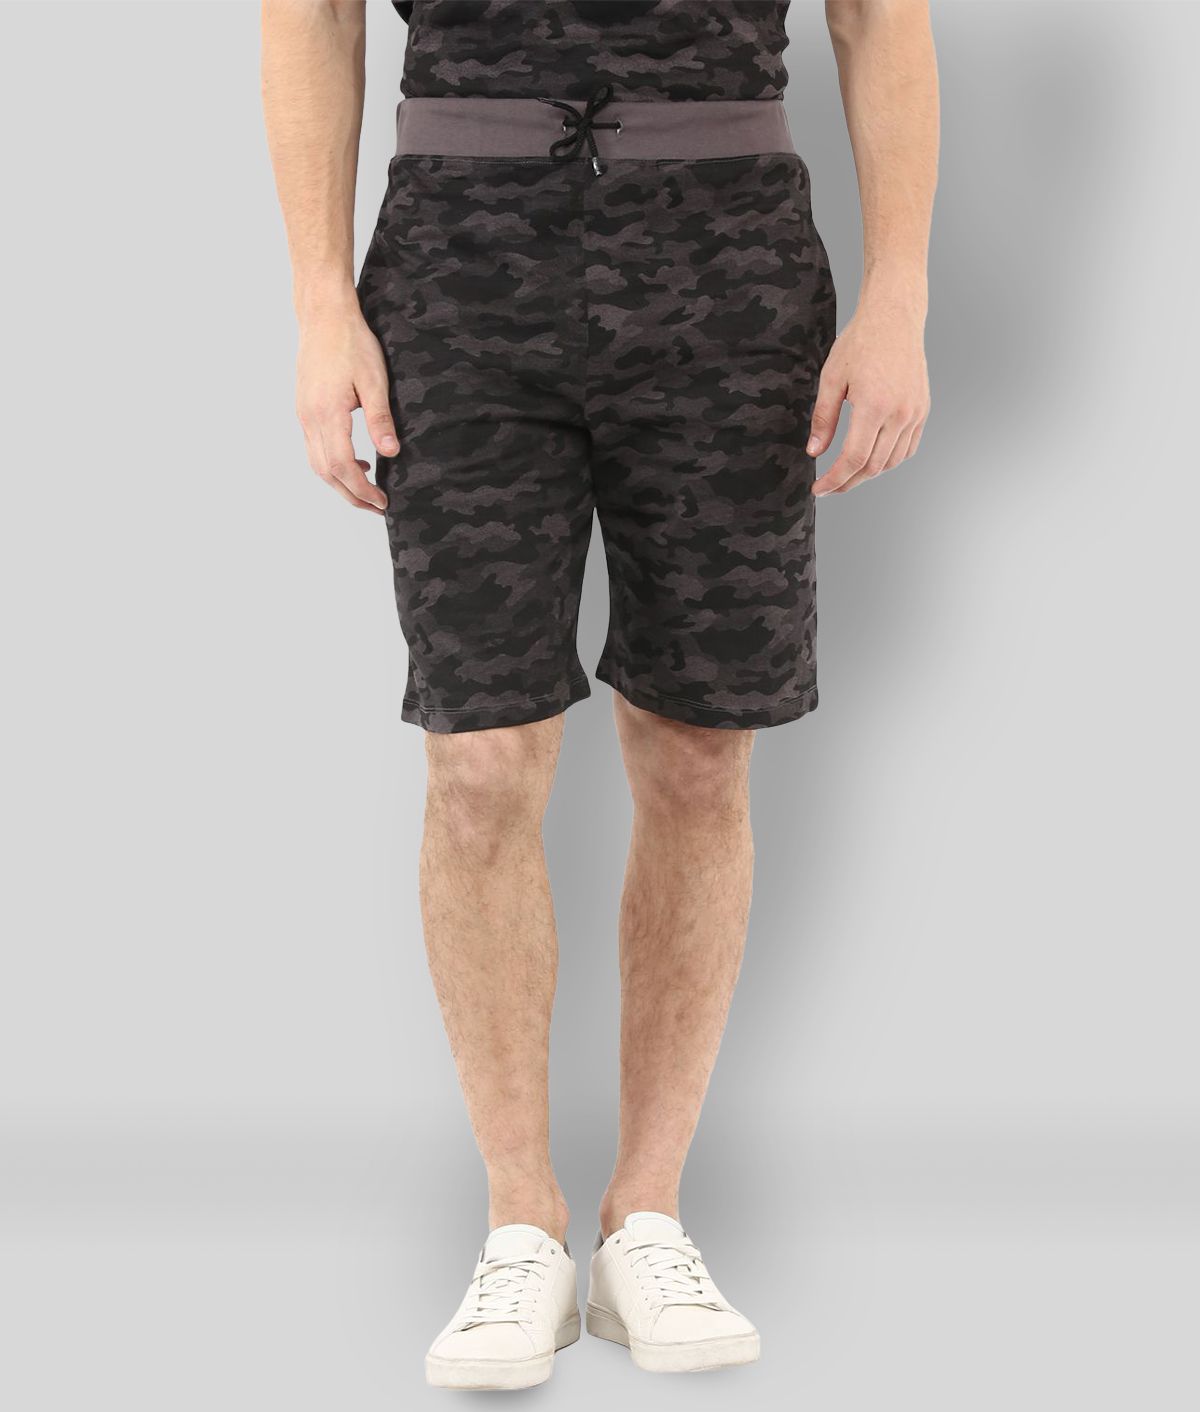 Urbano Fashion - Grey Cotton Men's Shorts ( Pack of 1 )